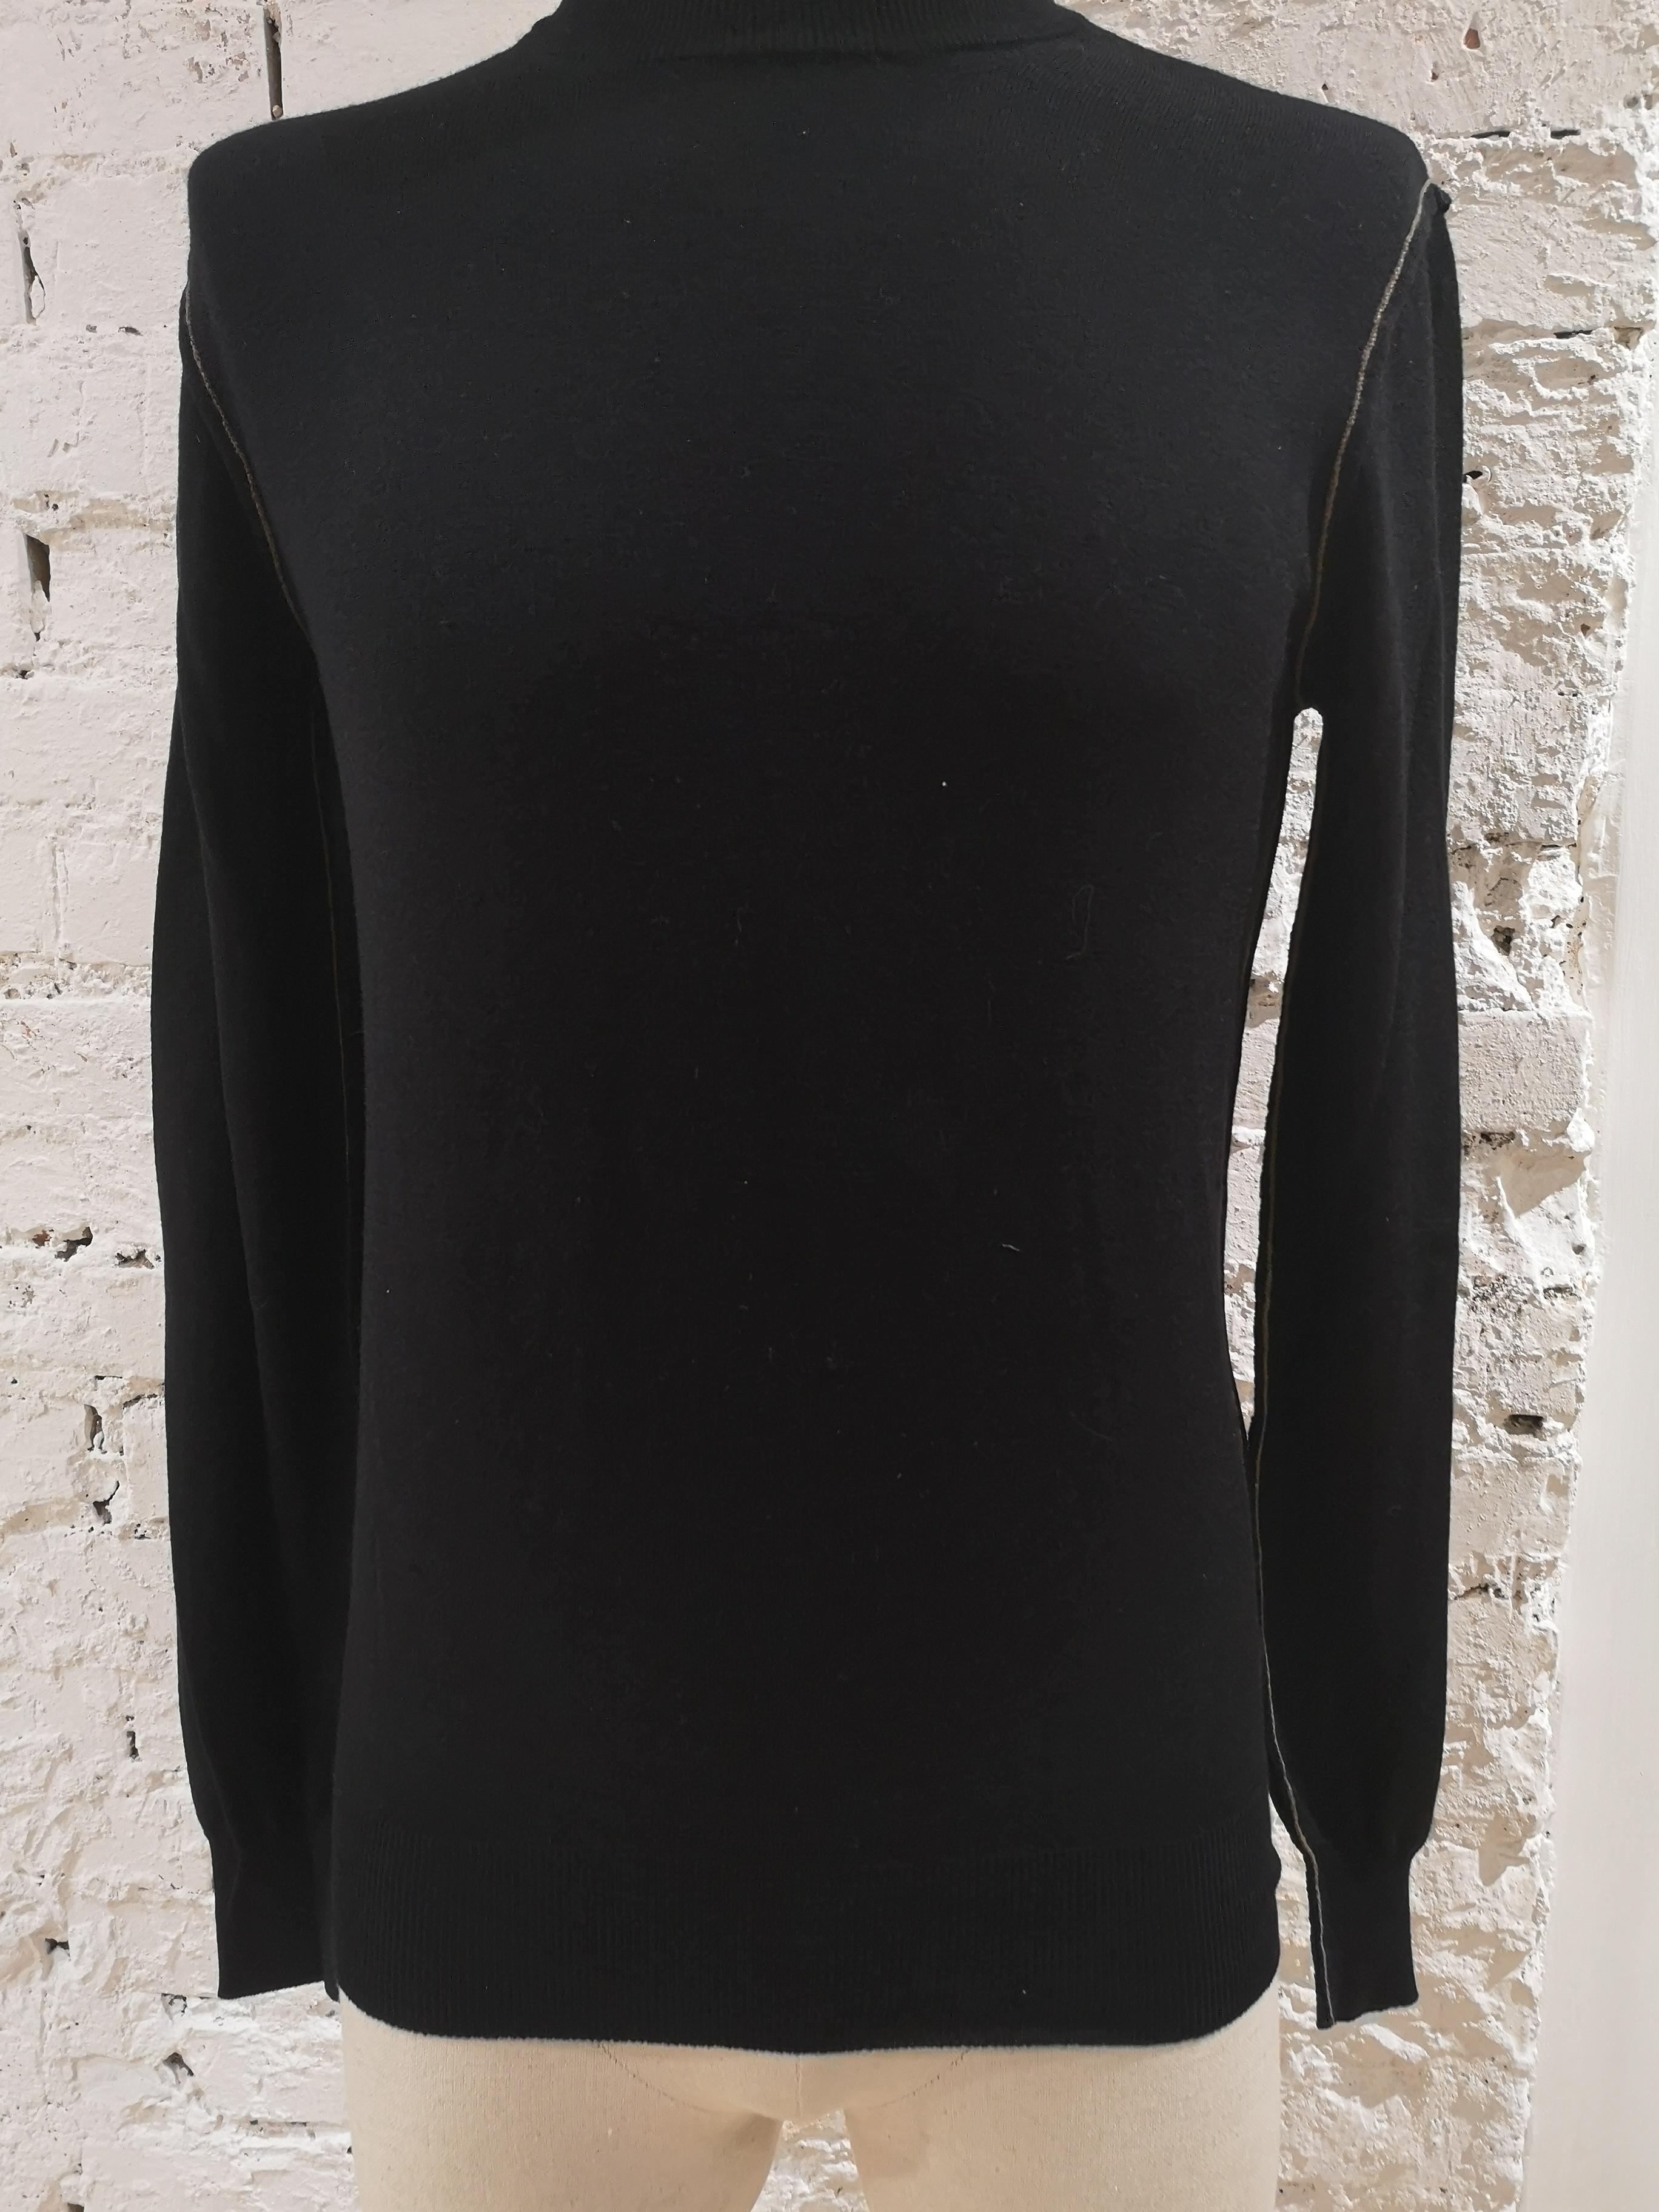 Black Dolce & Gabbana black wool sweater